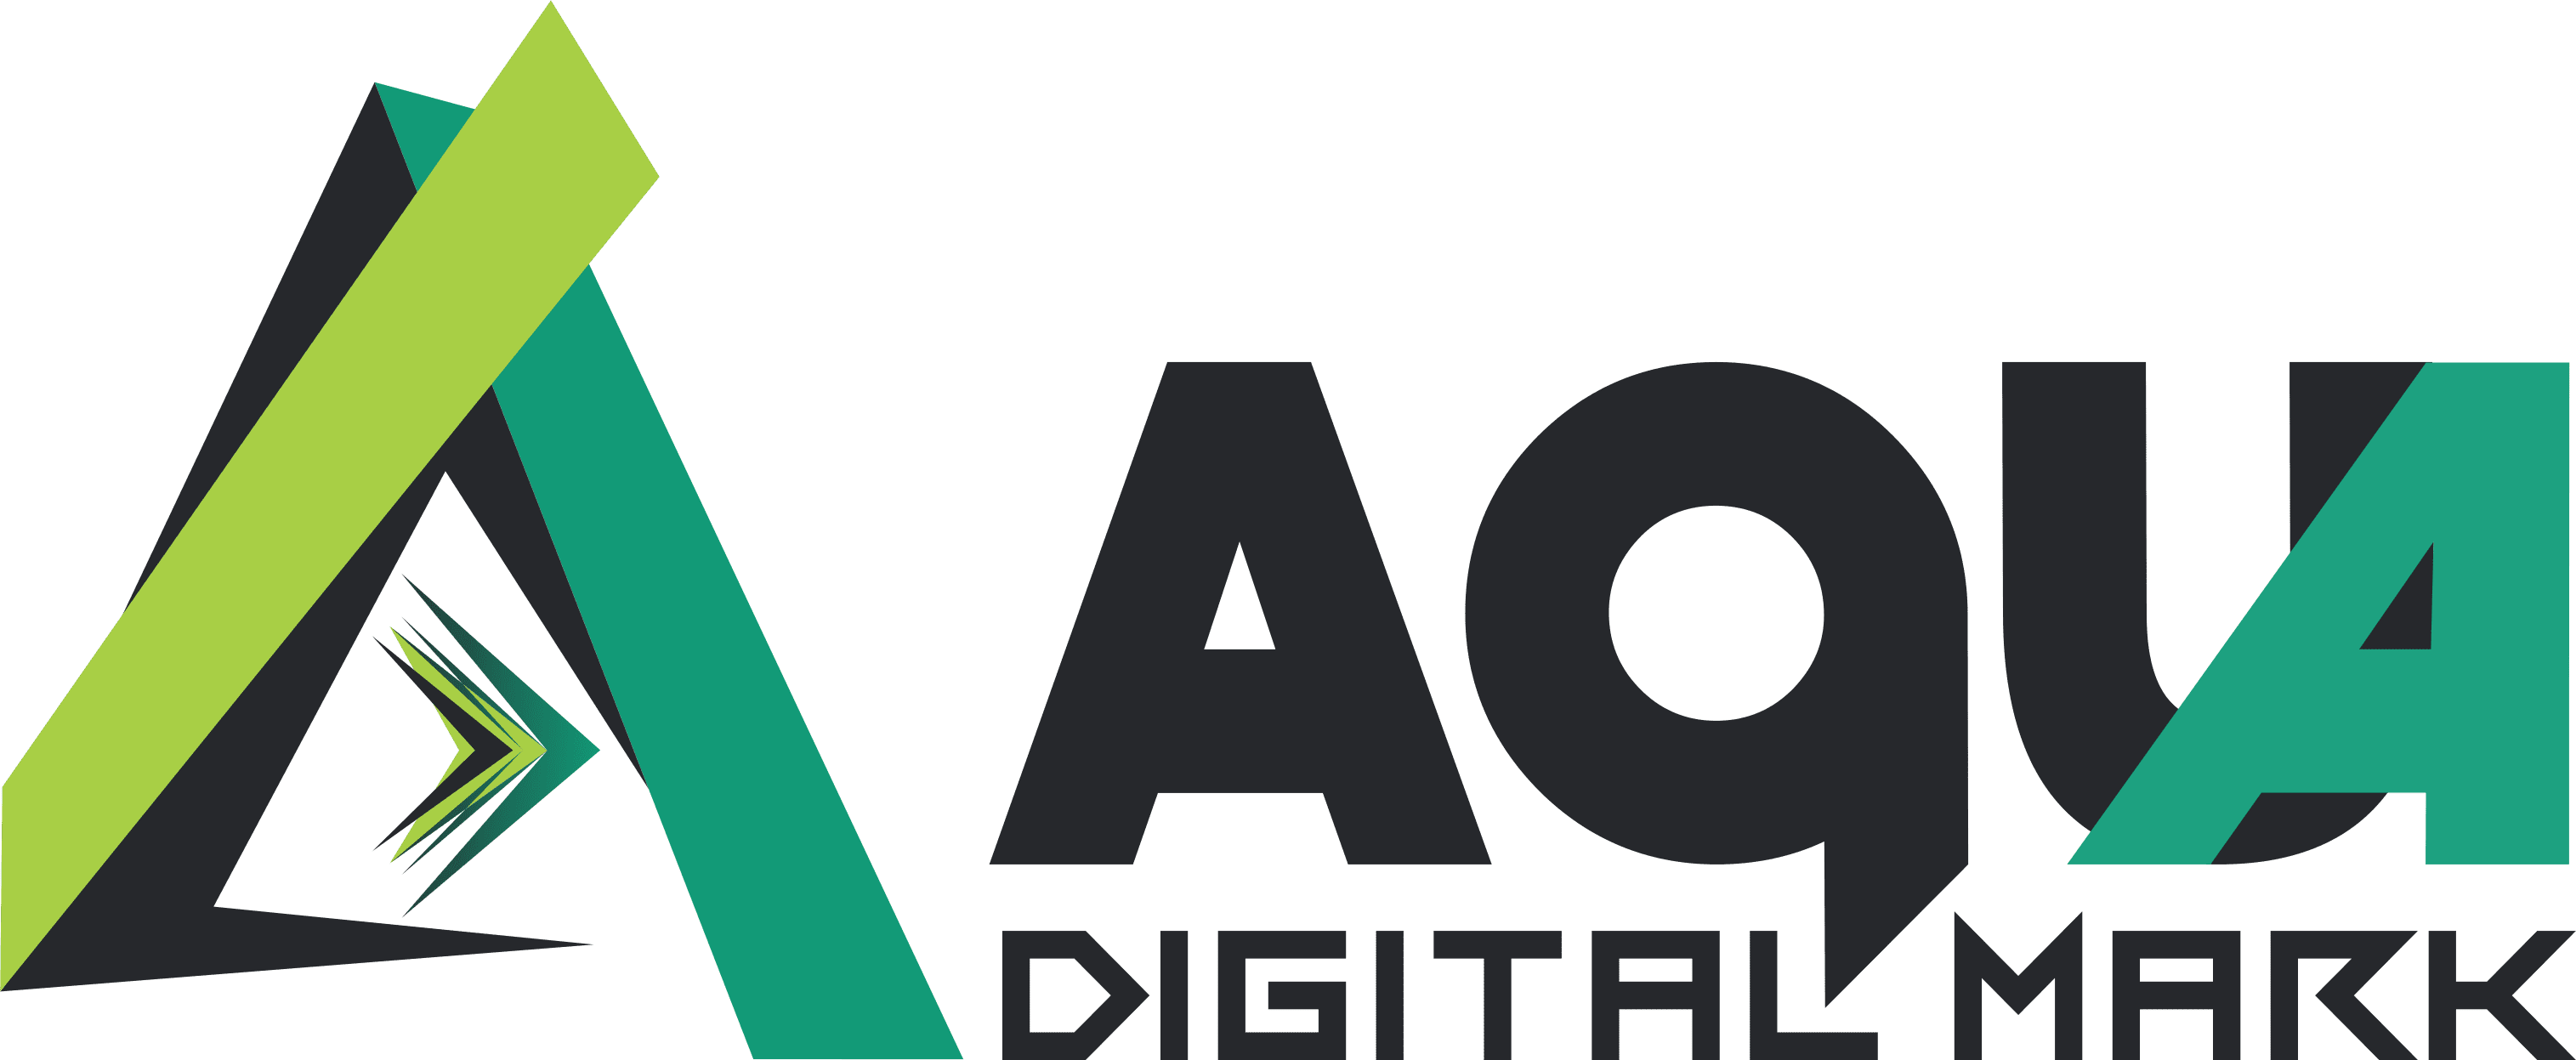 Aqua Digital Mark